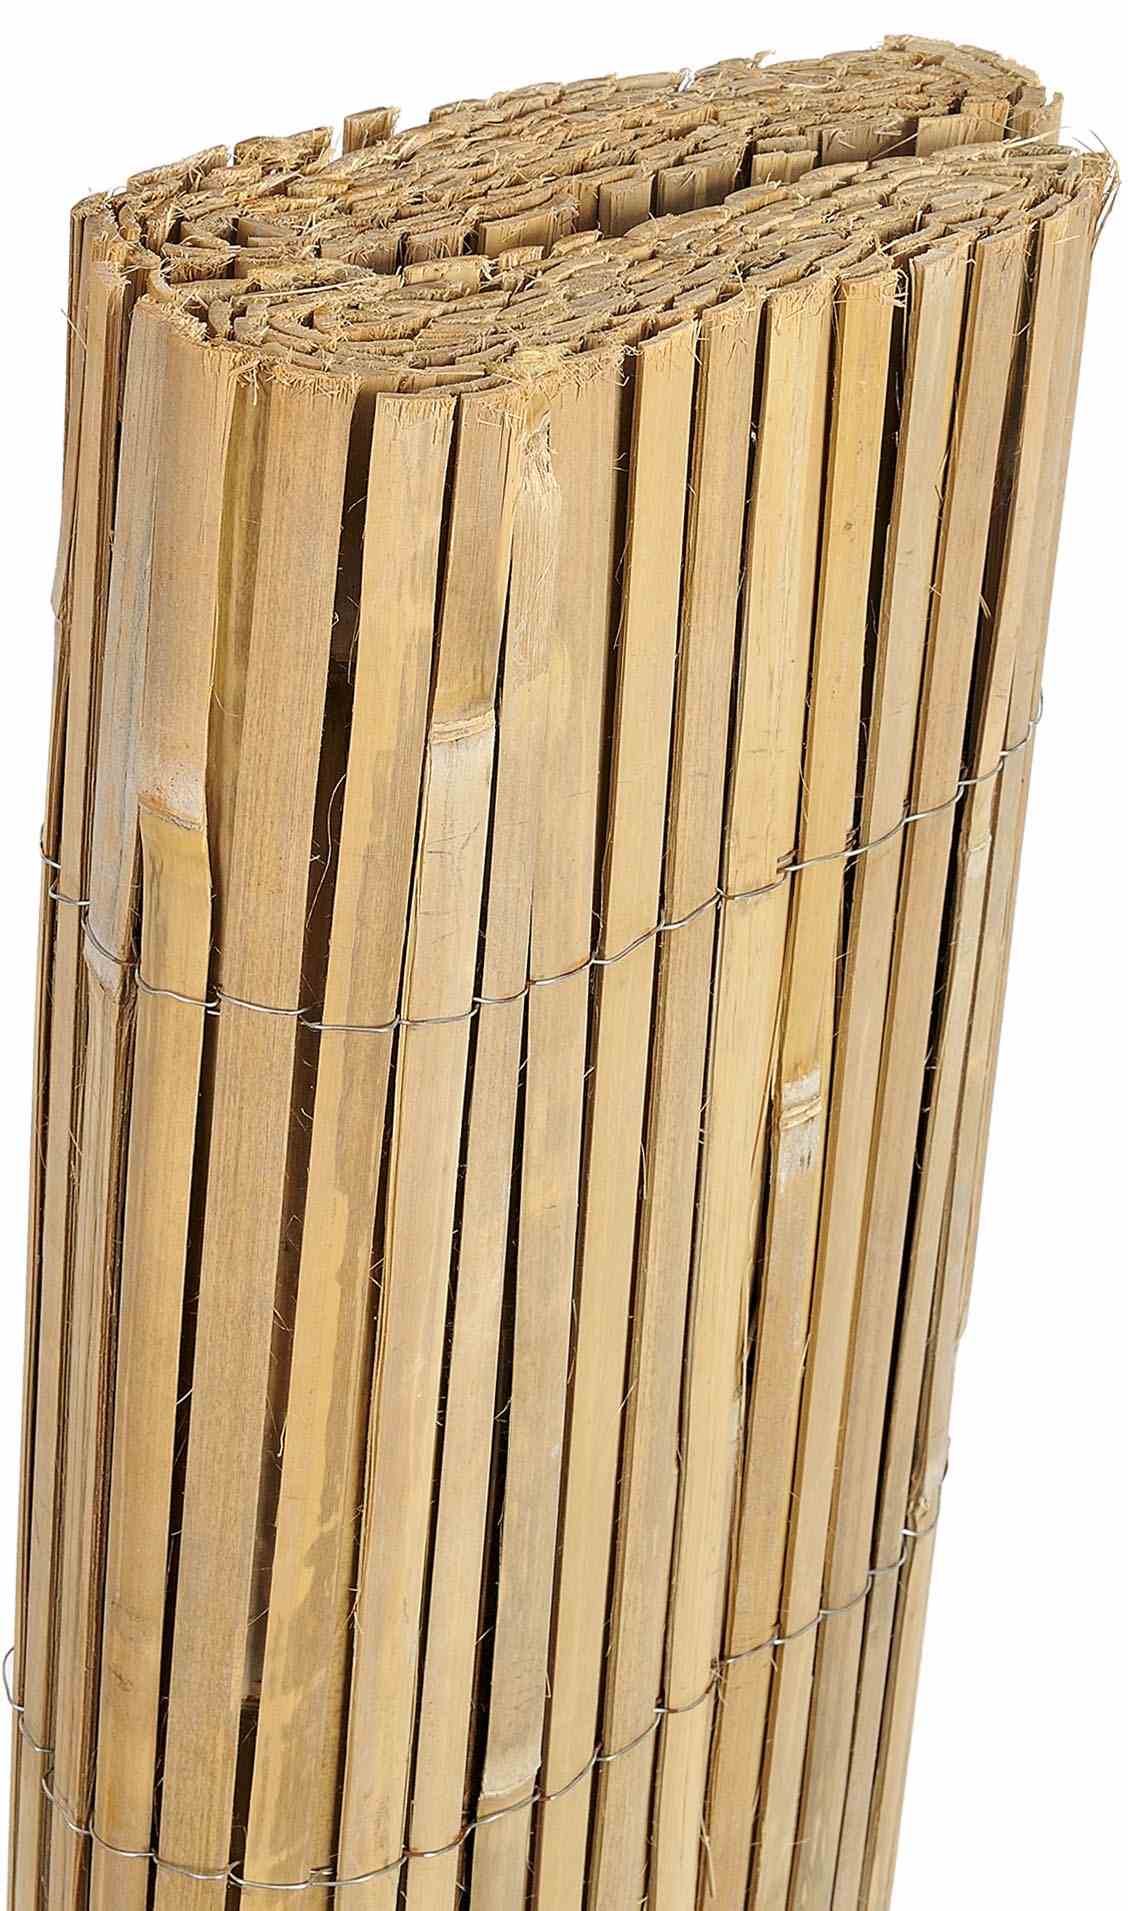 Brise vue bambou : osez l'exotisme